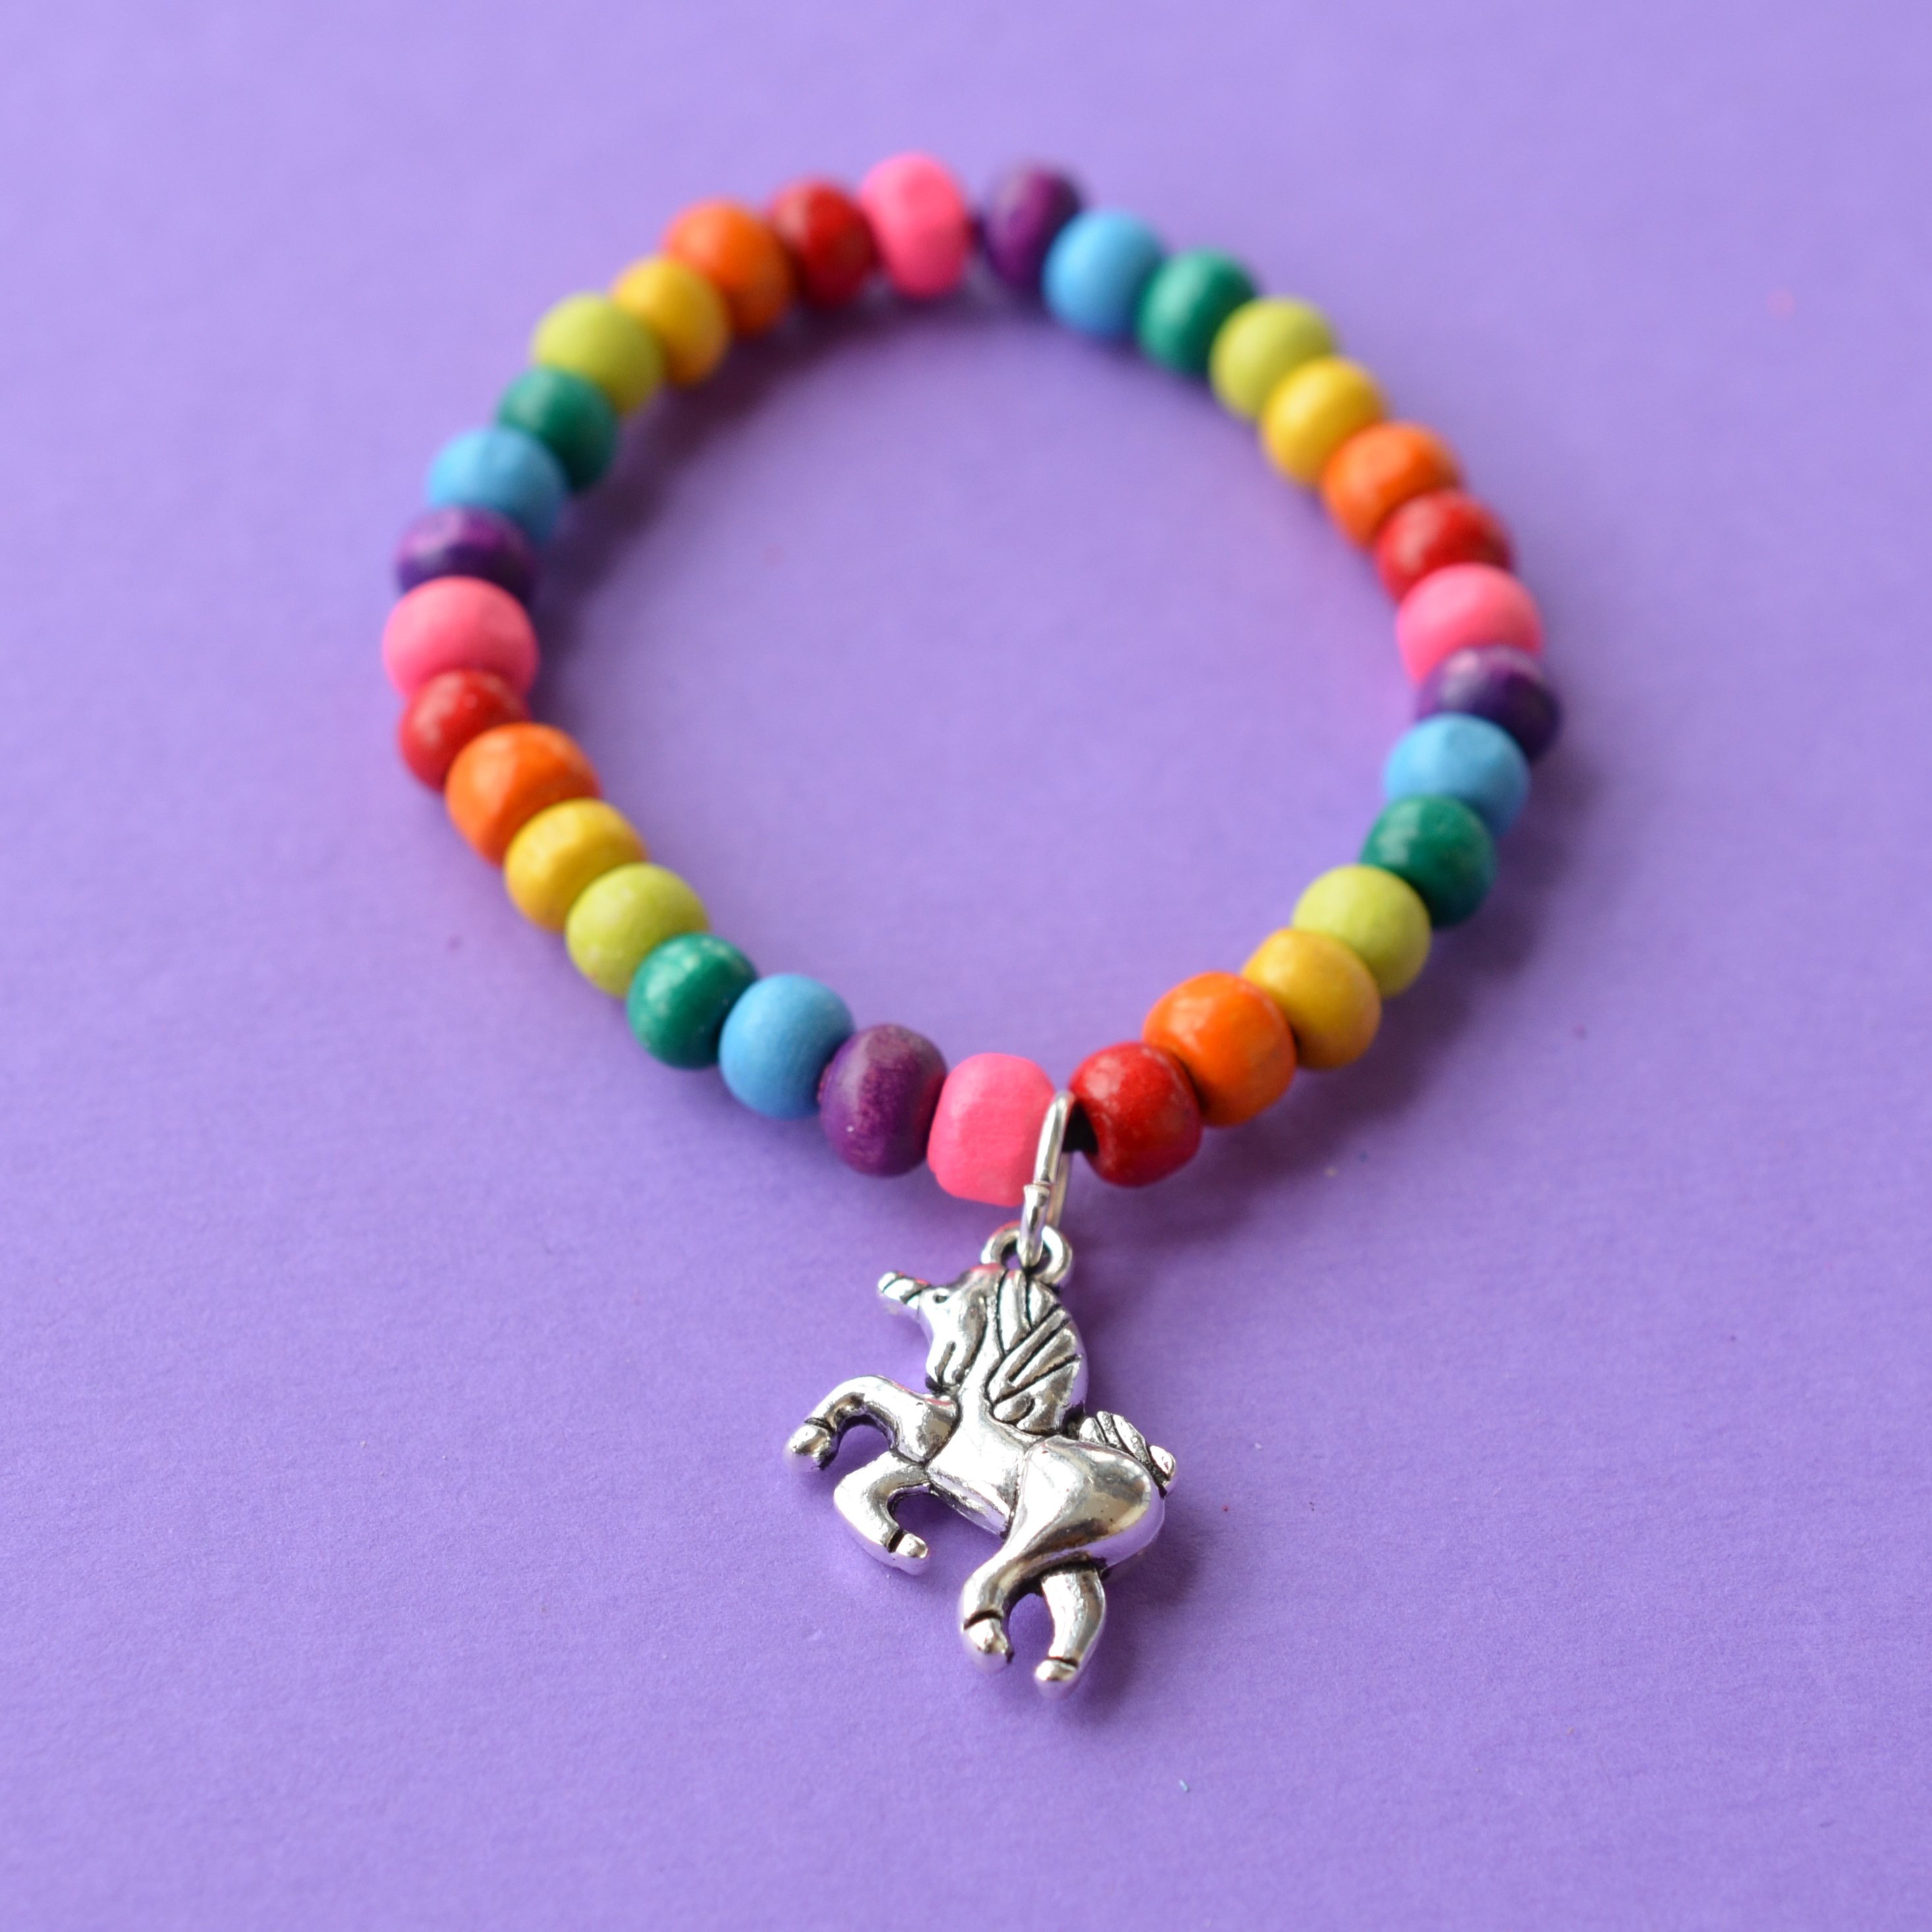 Colourful Child’s Wooden Bead Unicorn Charm Bracelet